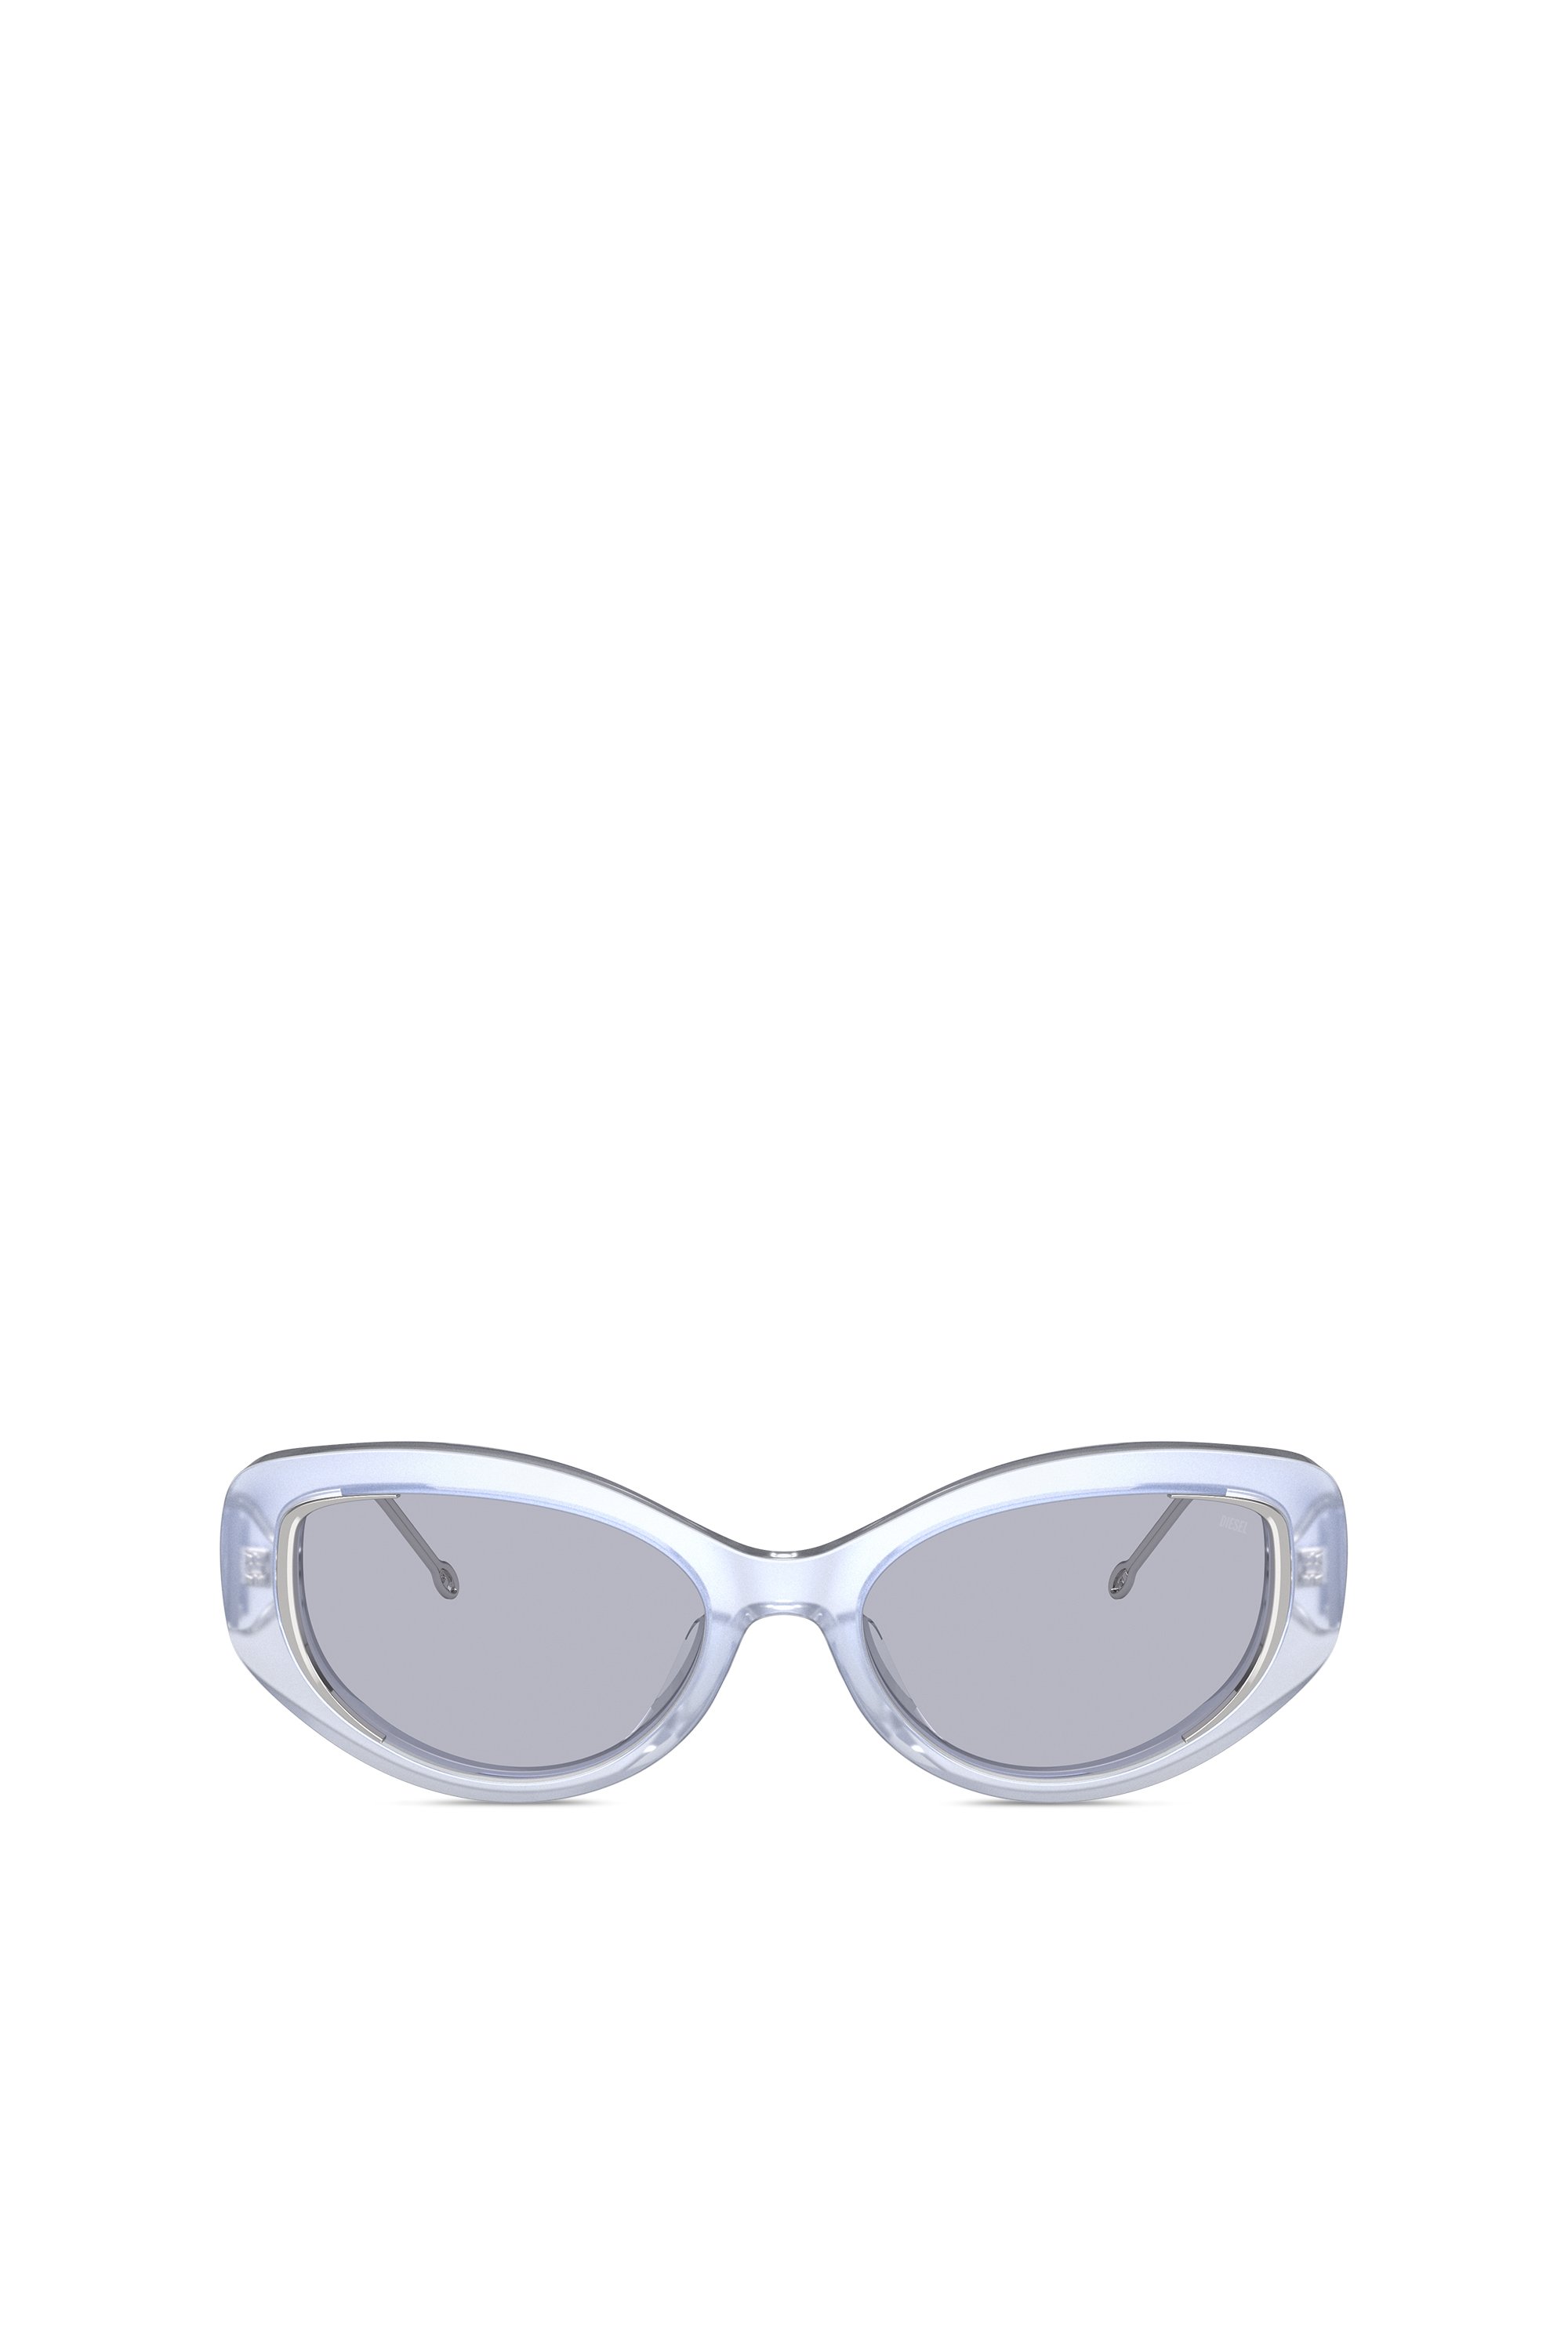 Diesel - Gafas modelo de ojo de gato - Gafas de sol - Unisex - Gris